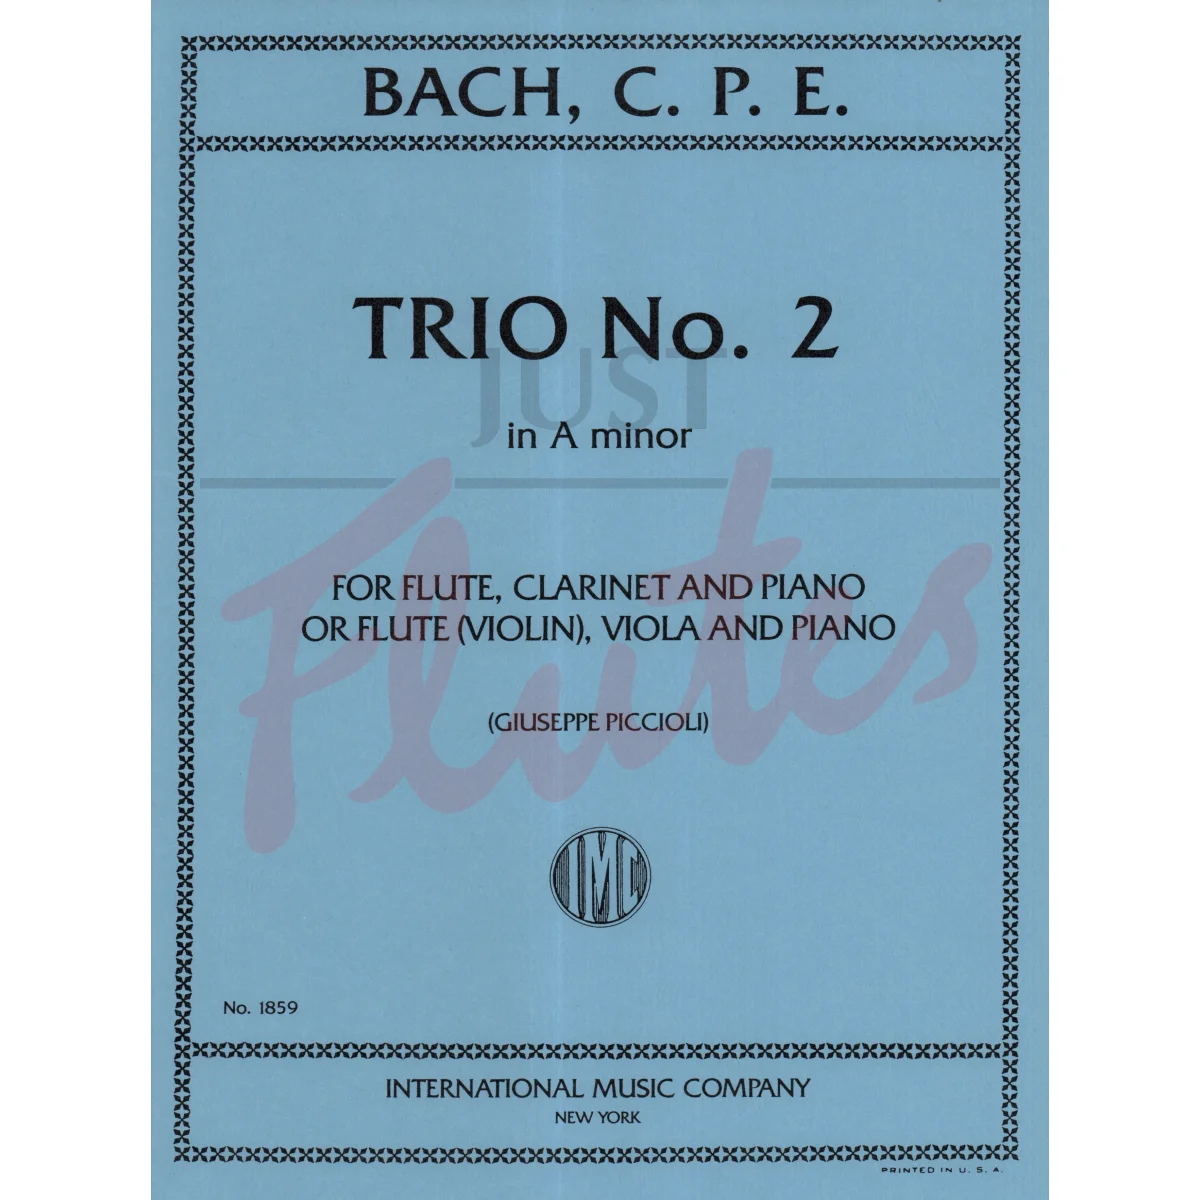 Trio No. 2 in A minor for Flute, Clarinet and Piano